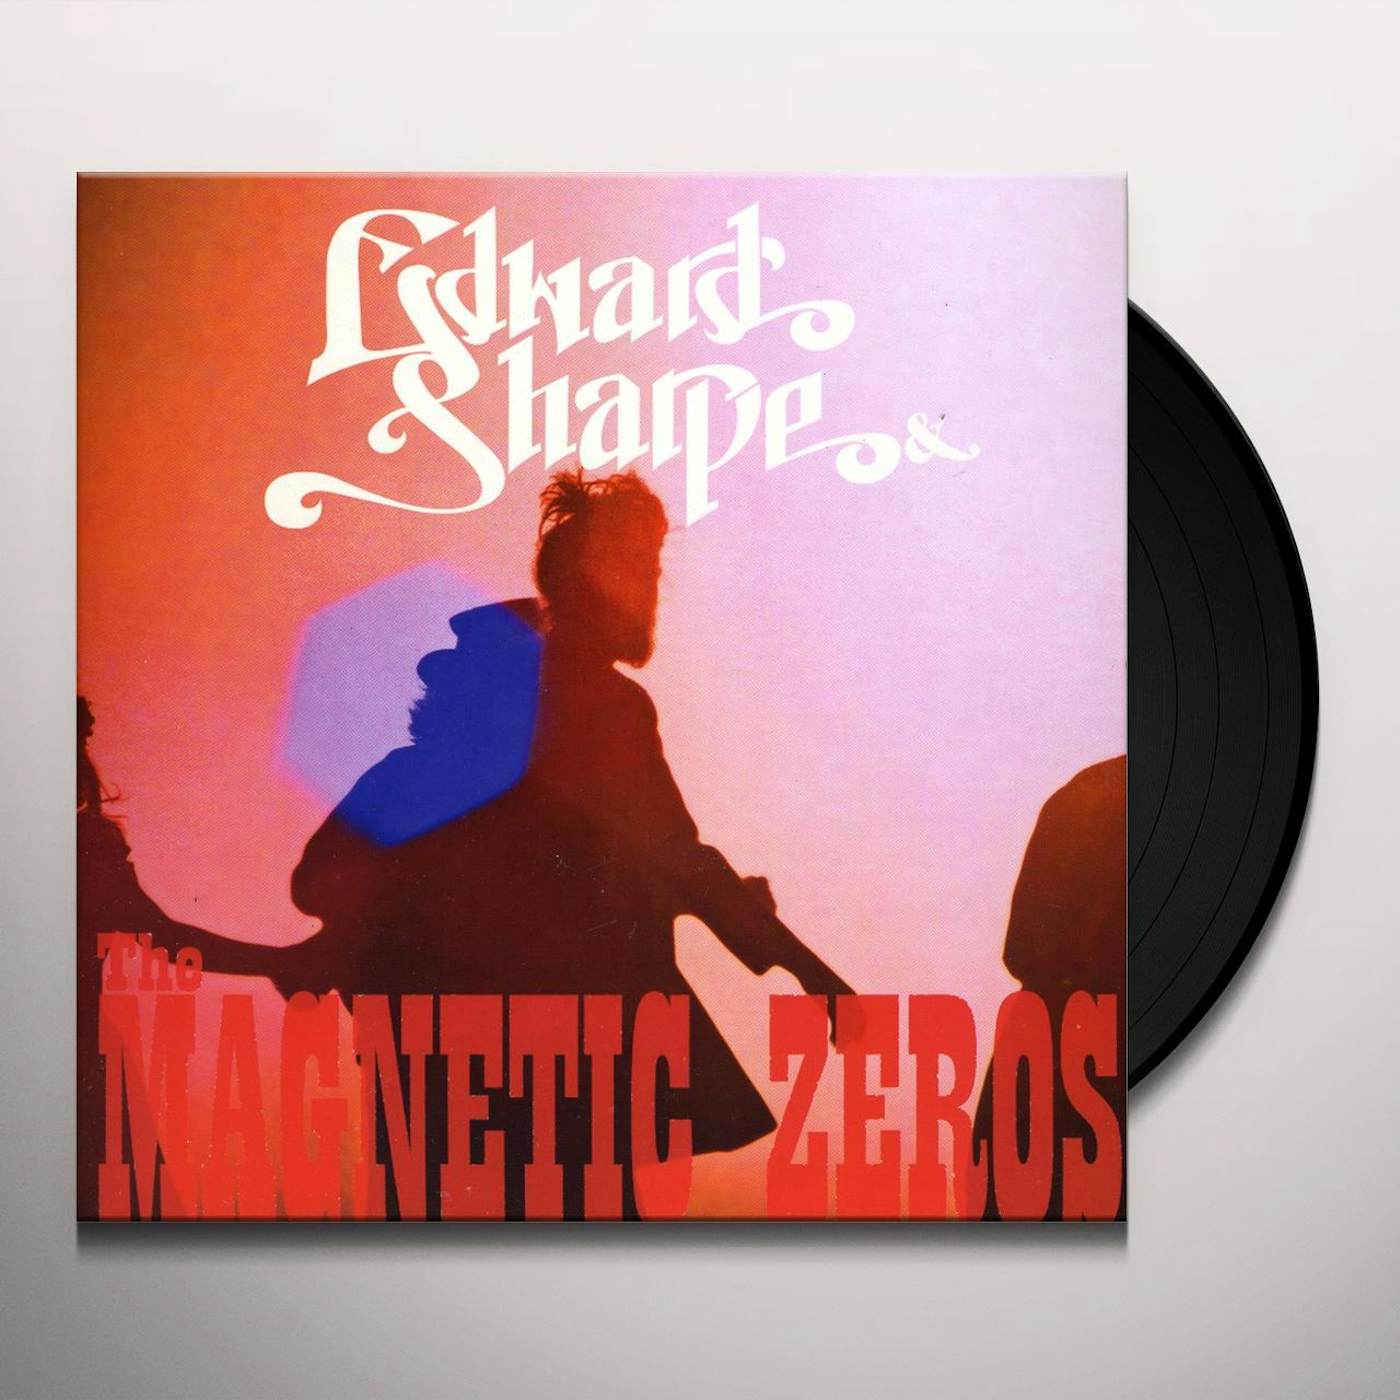 Edward Sharpe & The Magnetic Zeros 40 Day Dream Vinyl Record